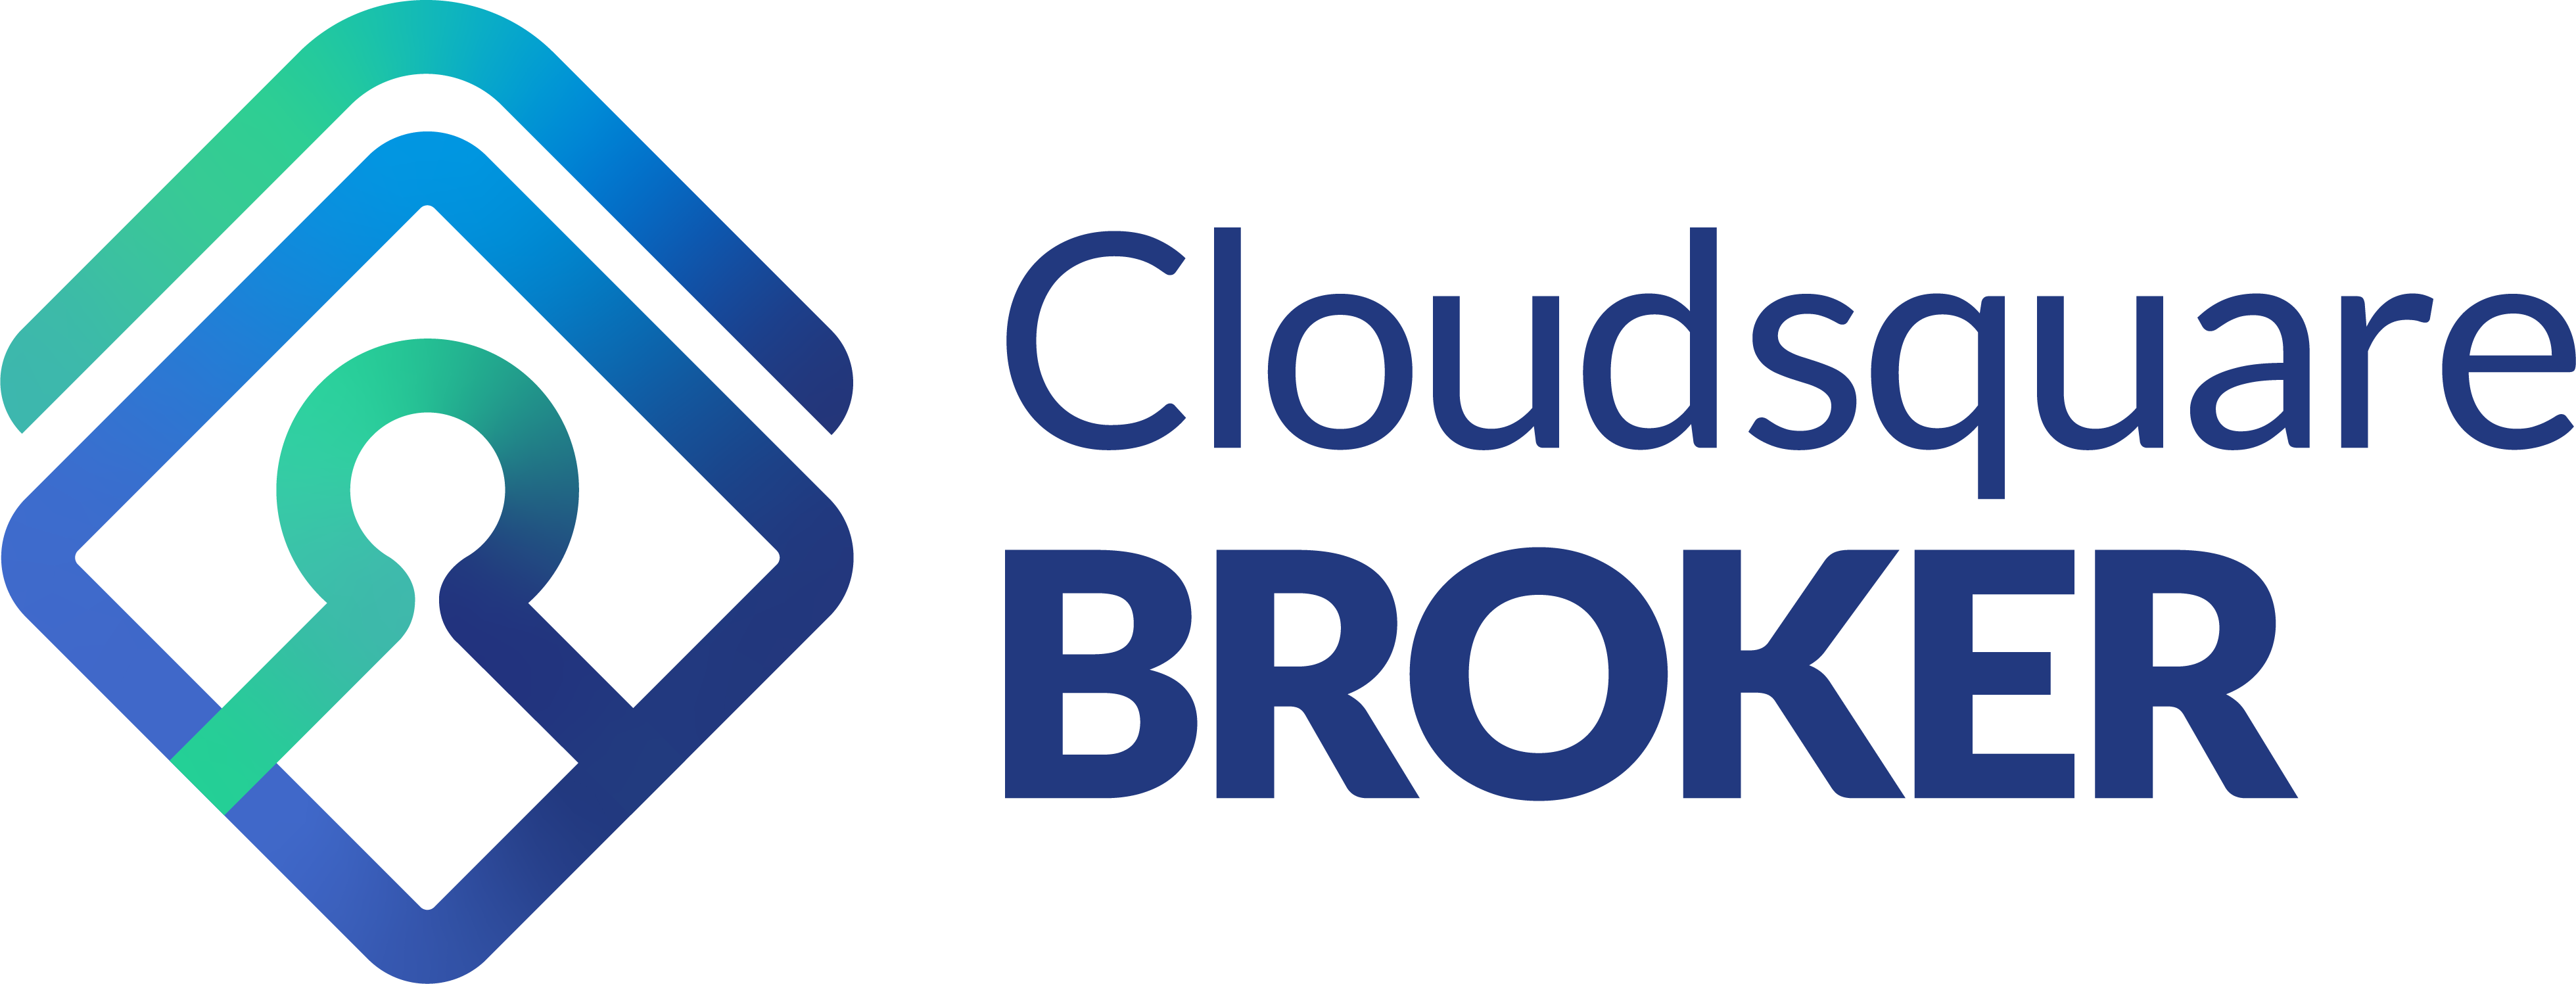 Cloudsquare Broker